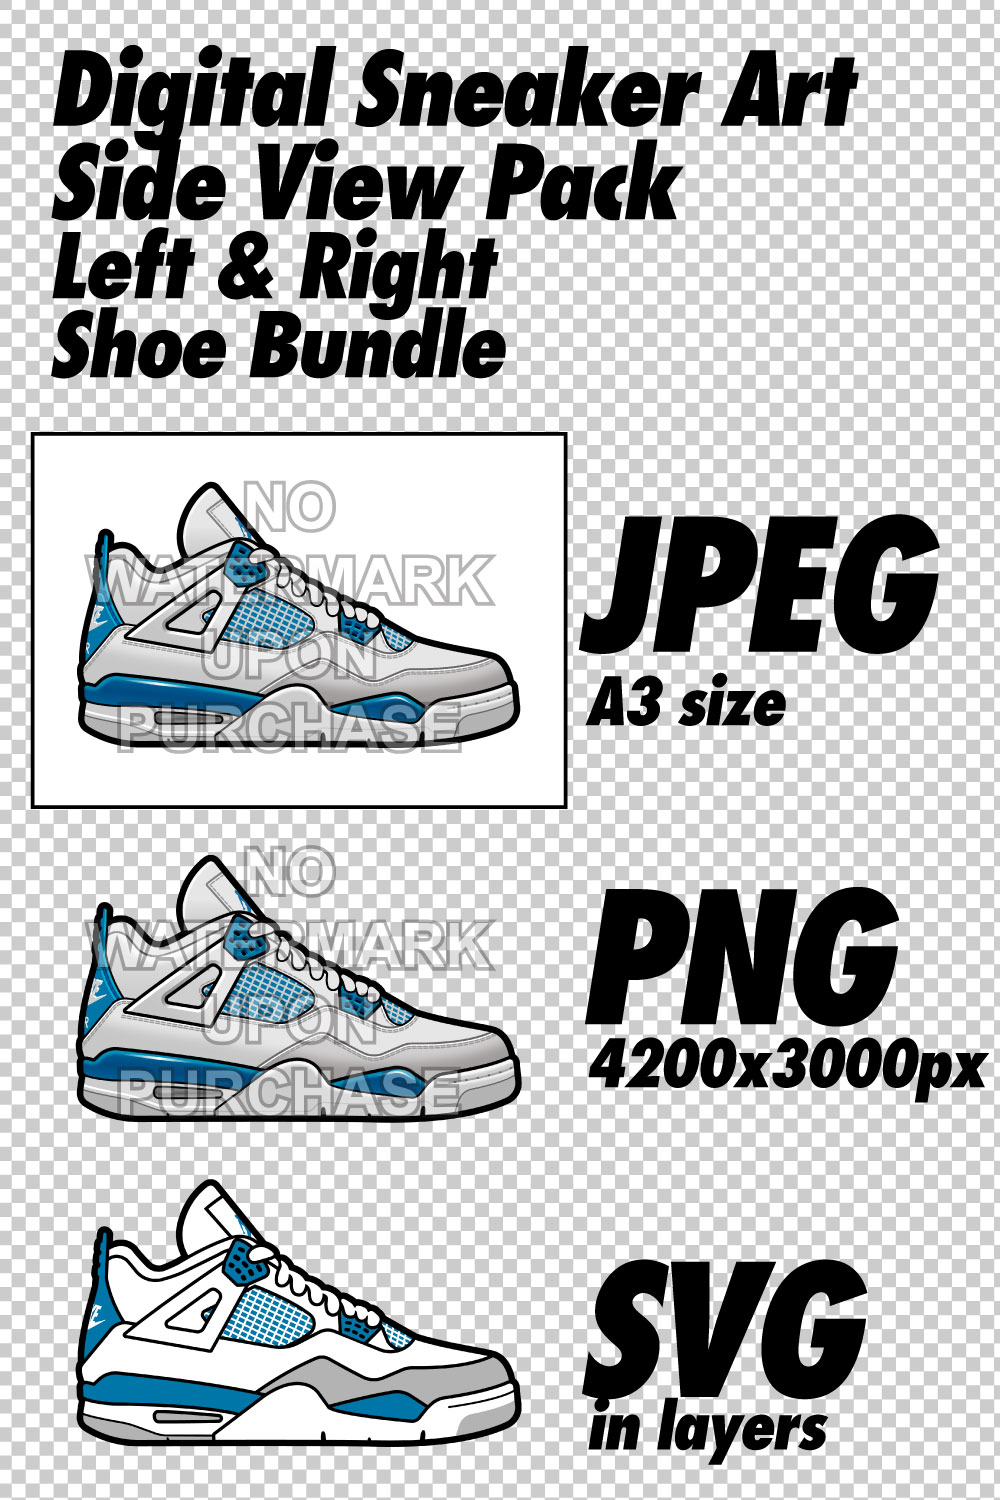 Side View Pack Air Jordan 4 Military Blue JPEG PNG SVG digital sneaker art pinterest preview image.